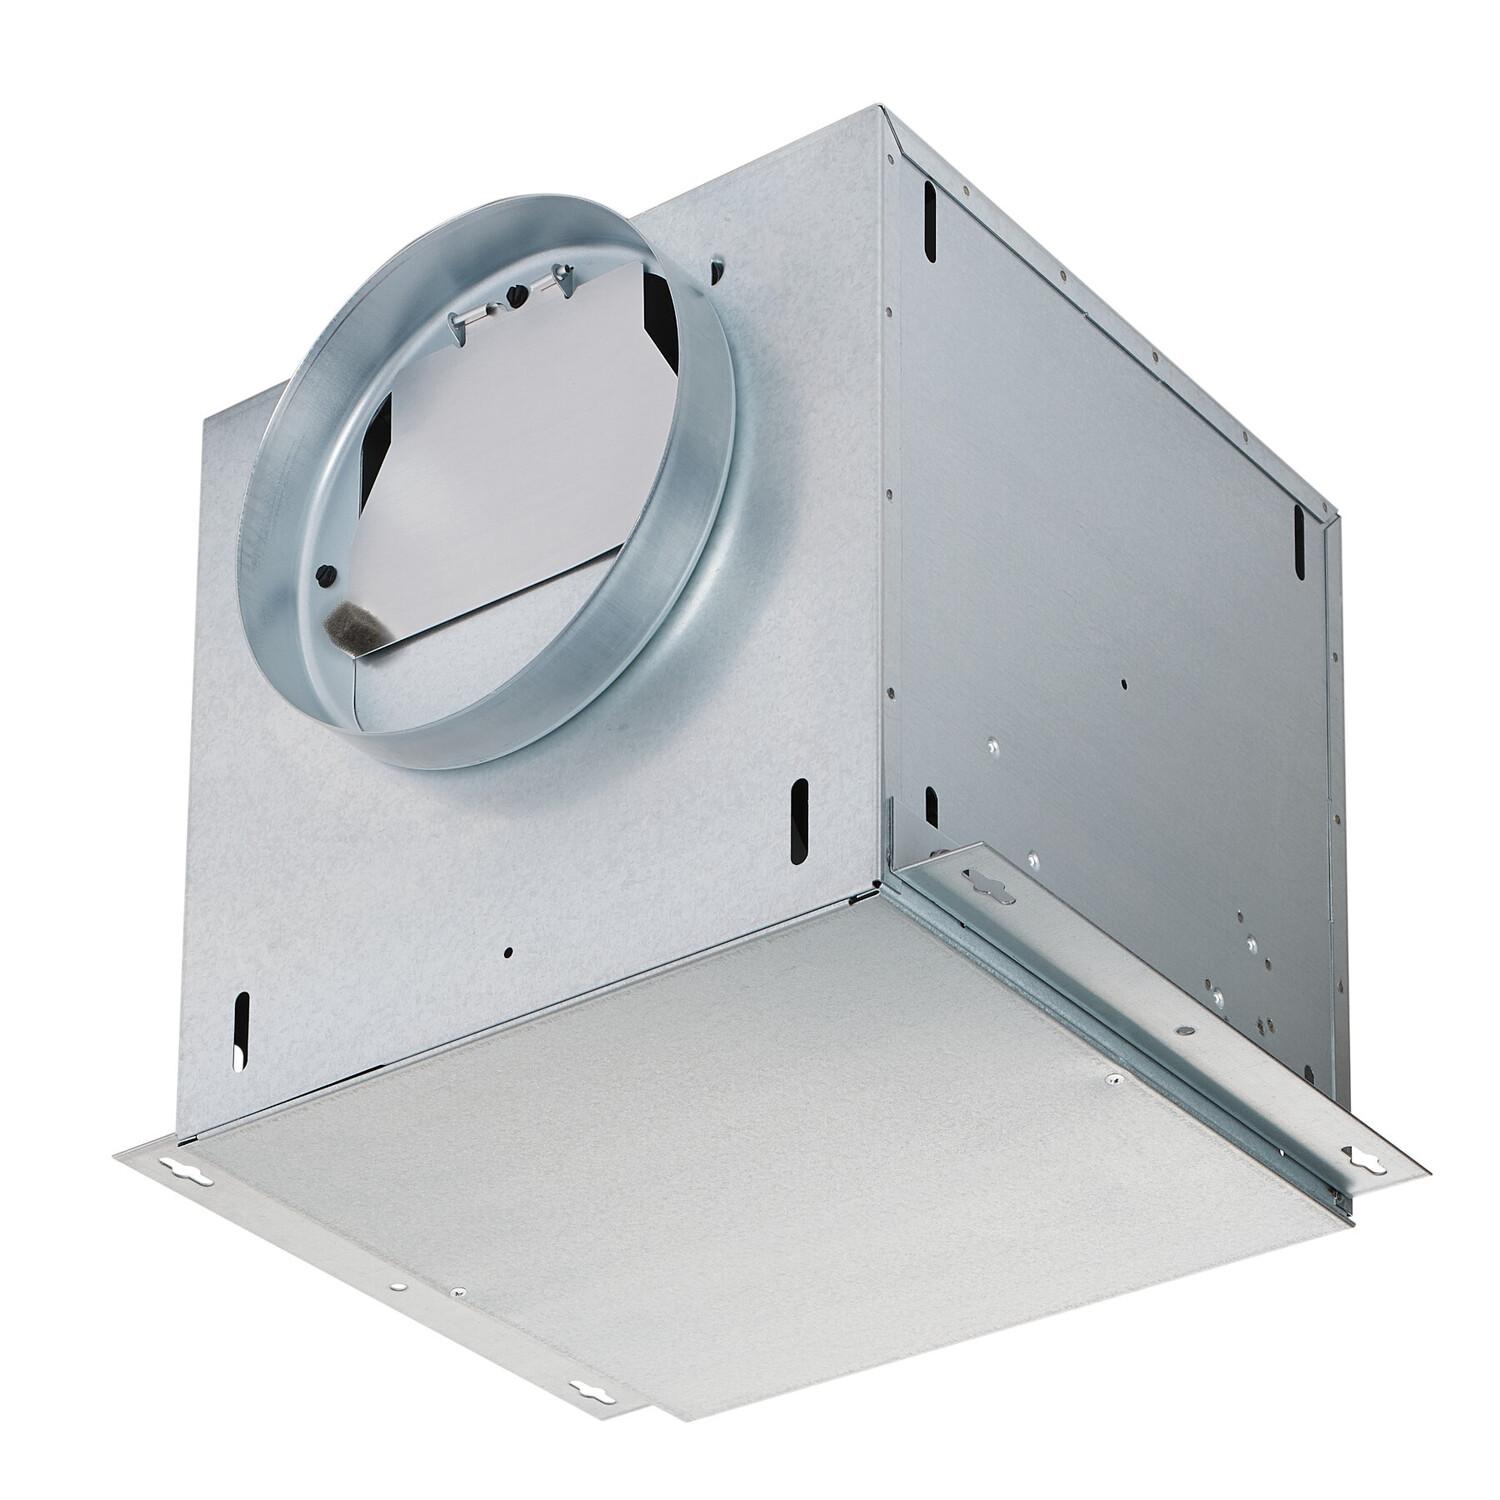 Broan High-Capacity, Light Commercial 270 CFM InLine Ventilation Fan, ENERGY STAR® certified